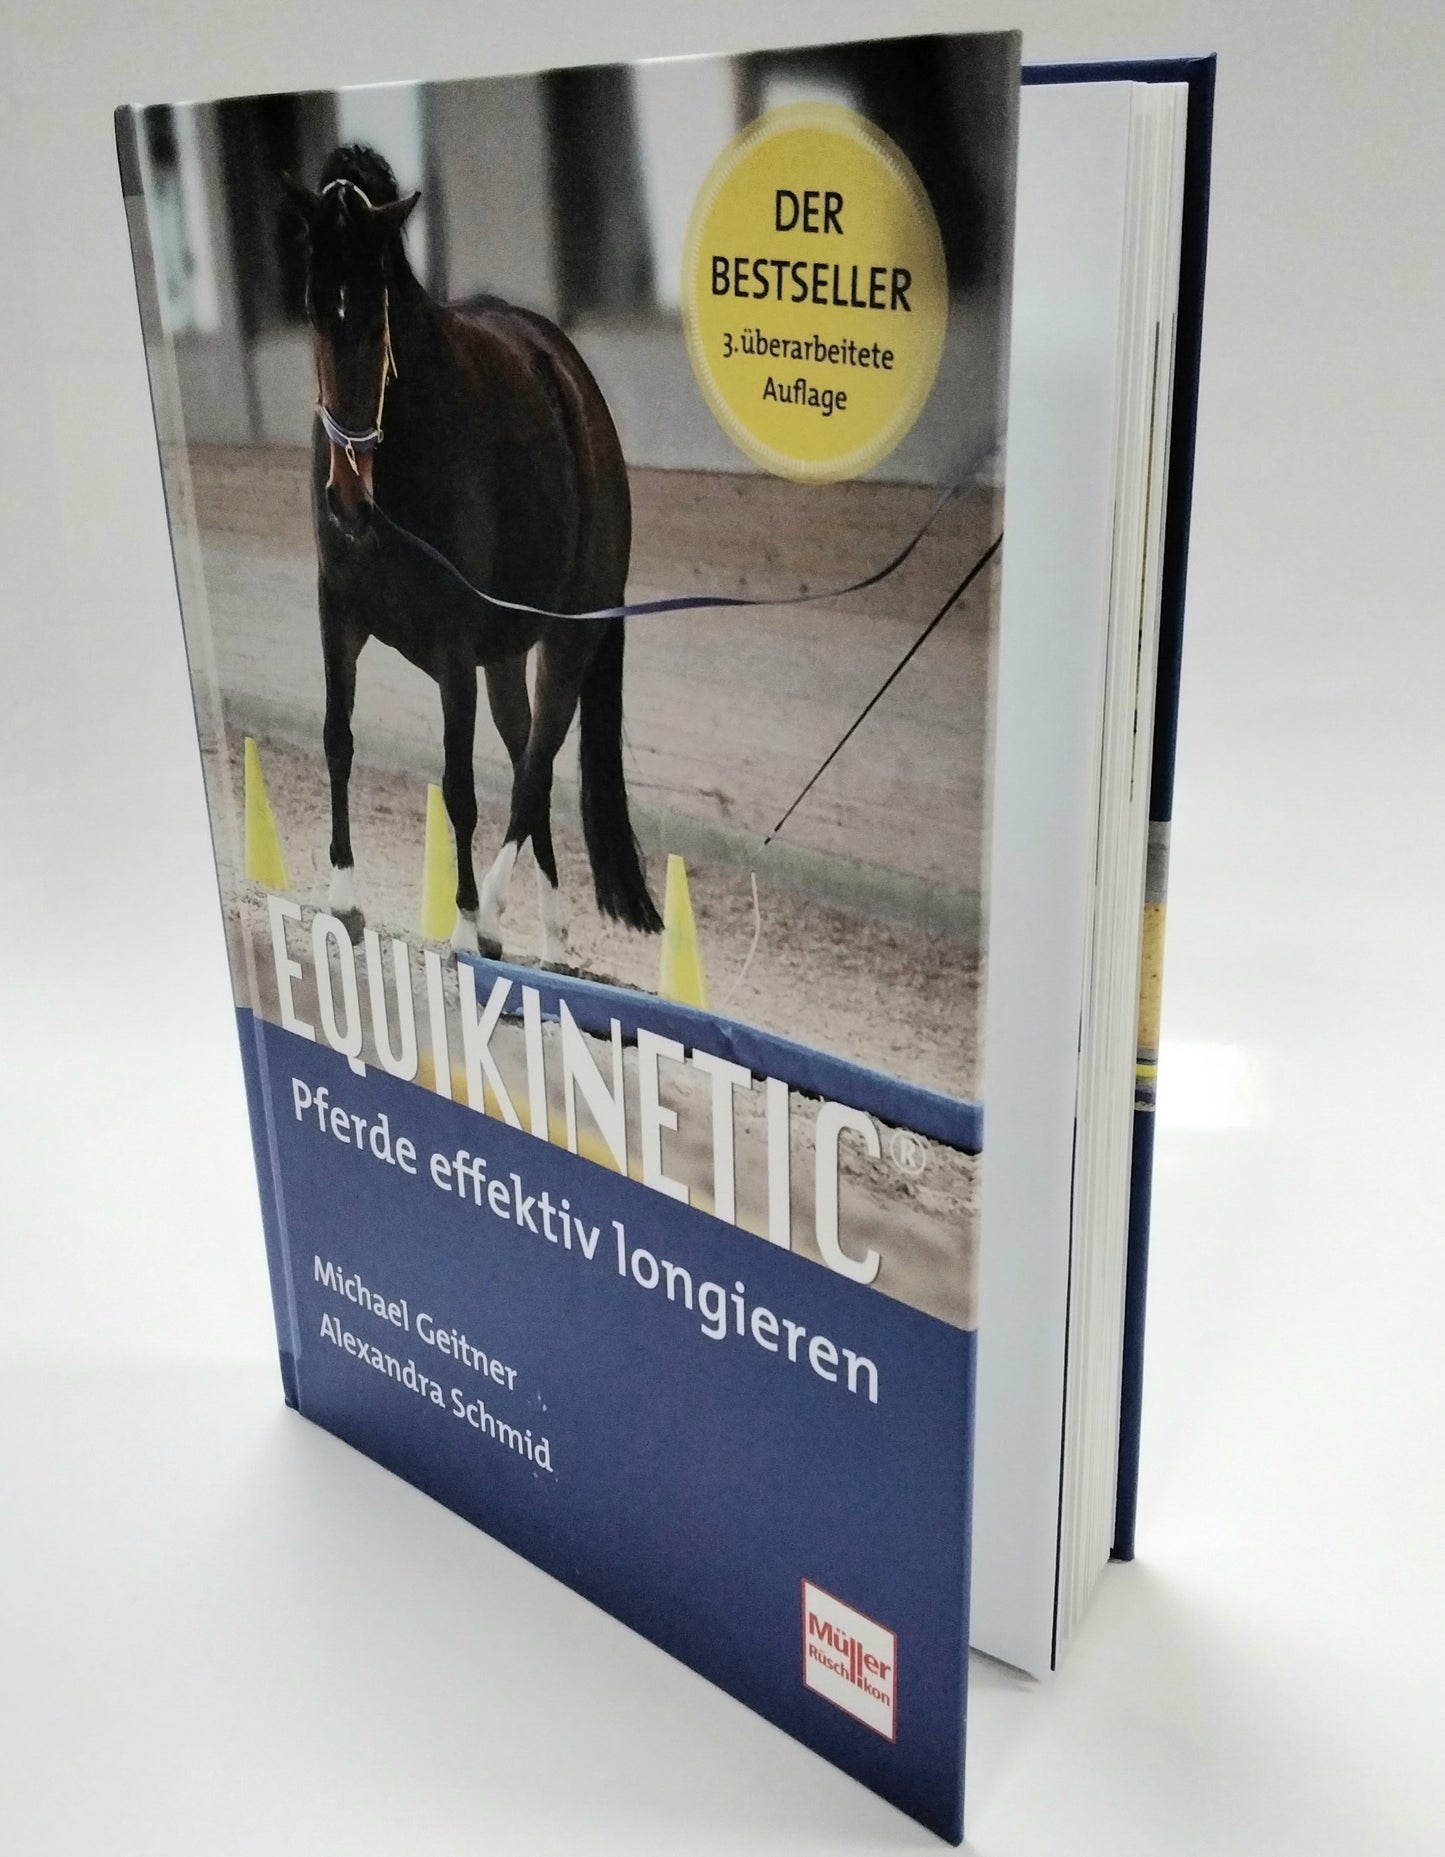 Michael Geitner / Alexandra Schmid  EQUIKINETIC - Pferde effektiv longieren